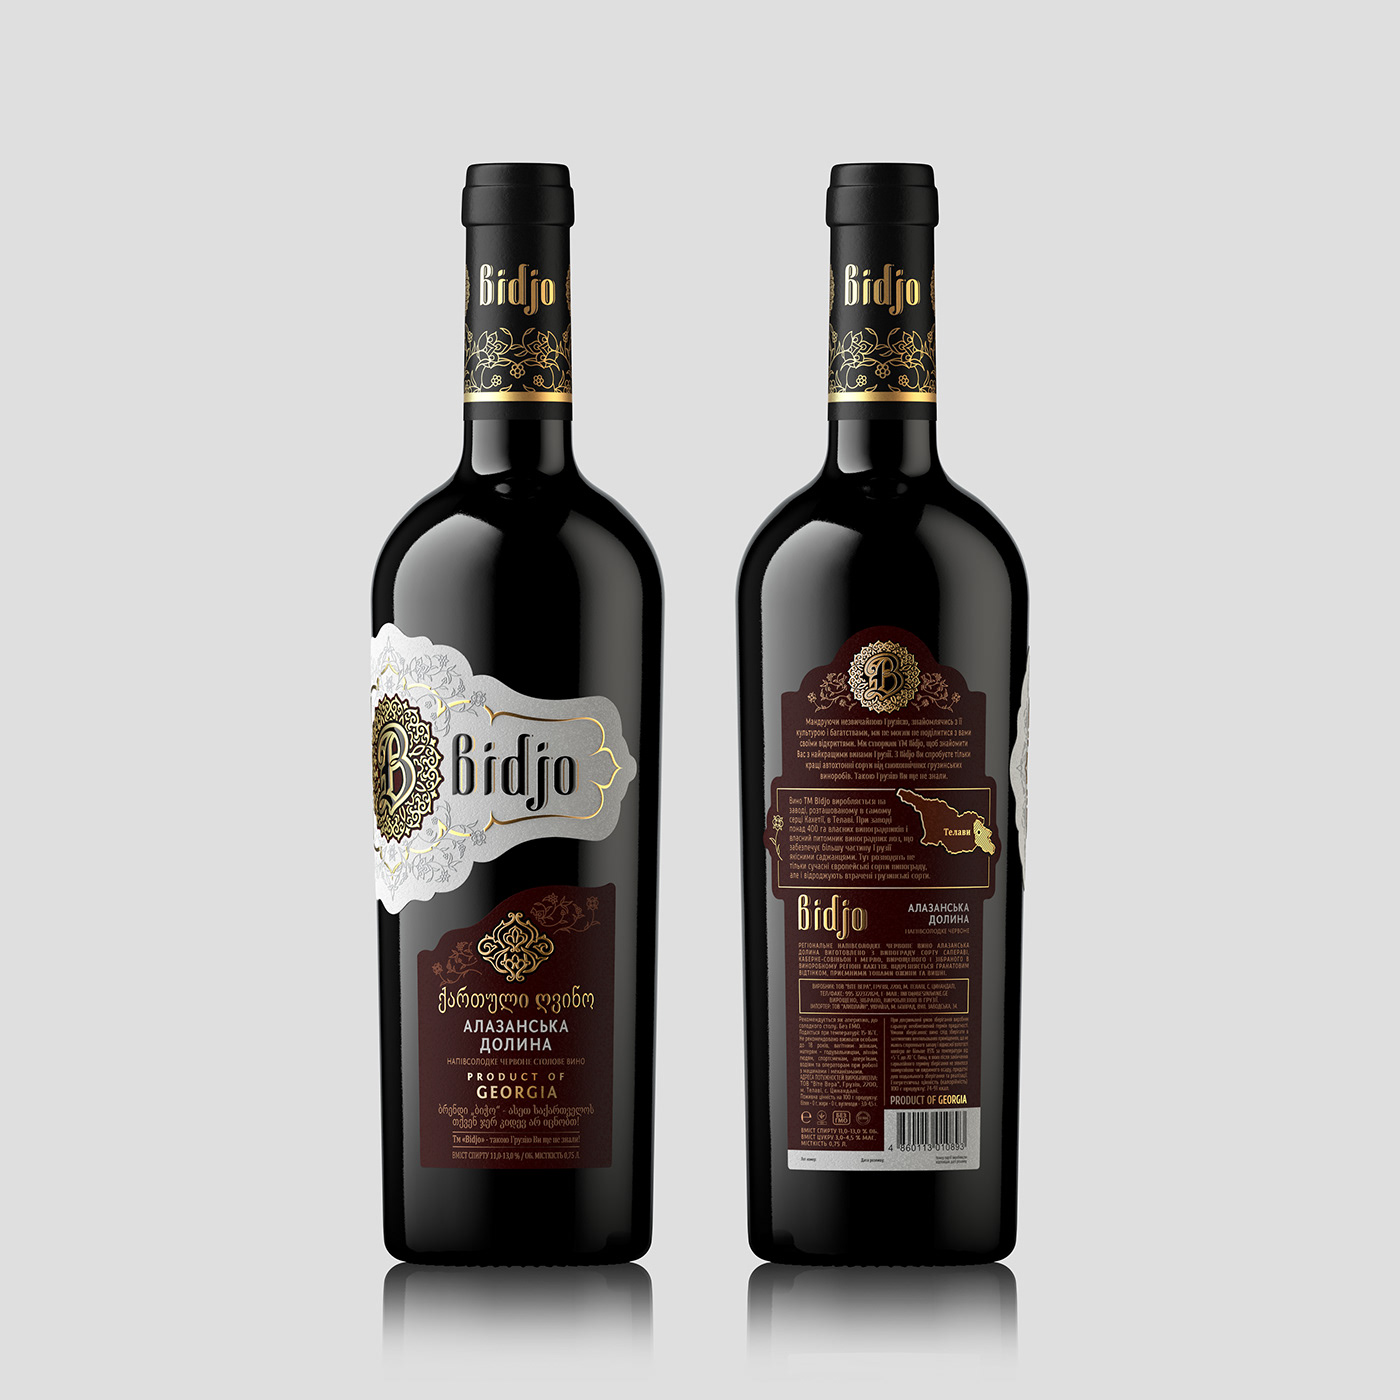 bidjo branding  wine georgian wine Sumilov shumilov shumi love design agency design Packaging